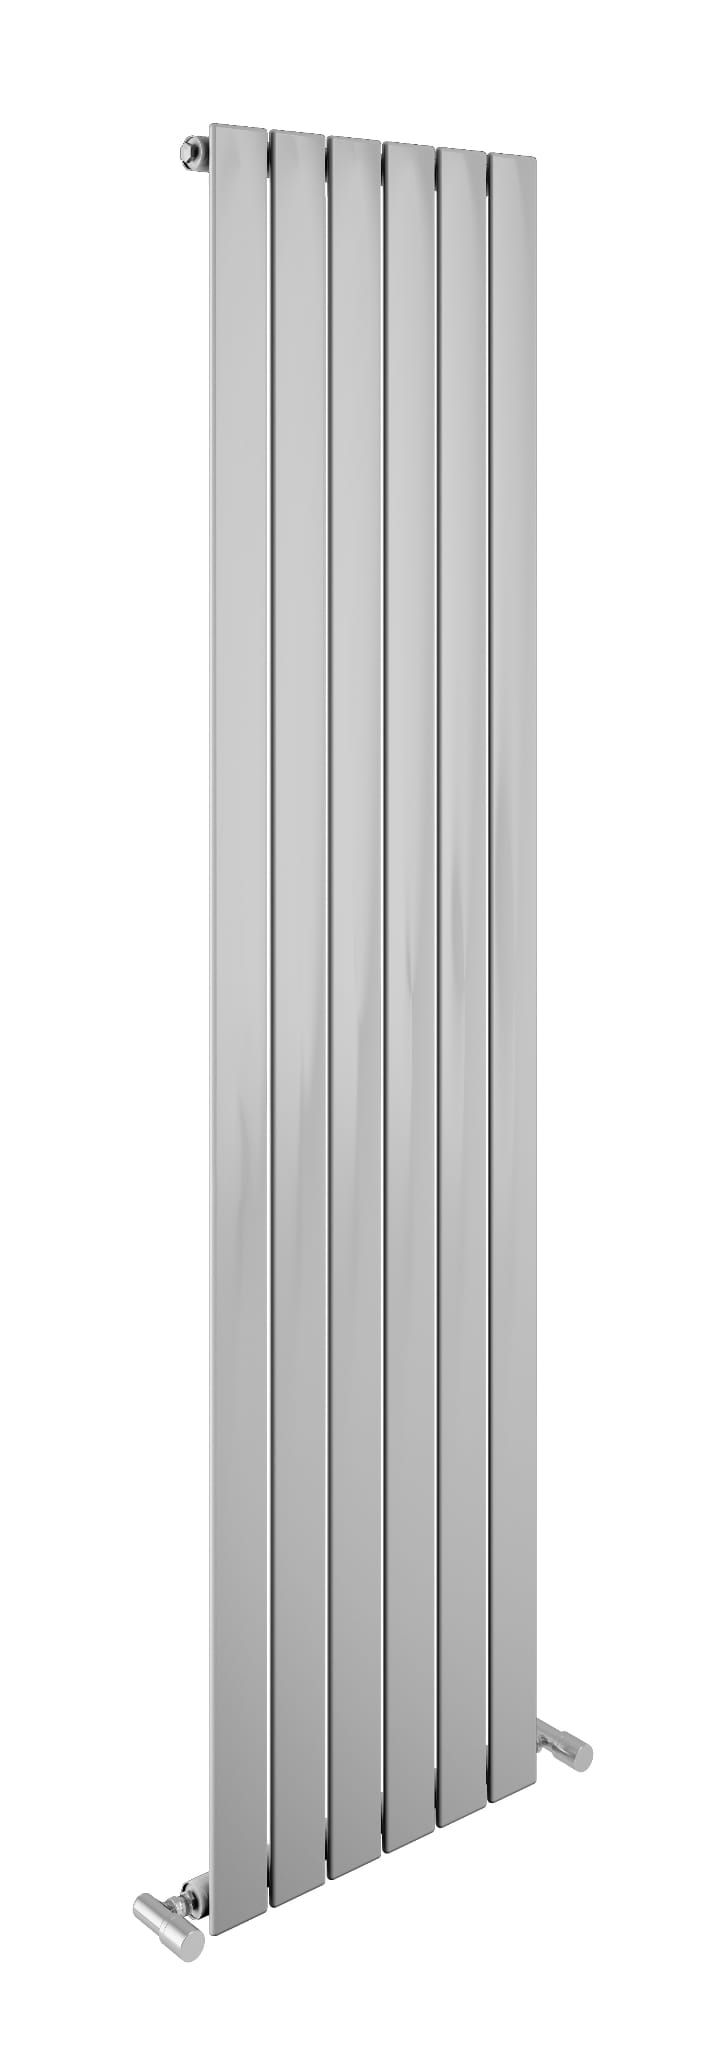 Sanotechnik - EISENSTADT - Dekoratívny kúpeľňový radiátor chróm 532 W 459 x 1800 mm